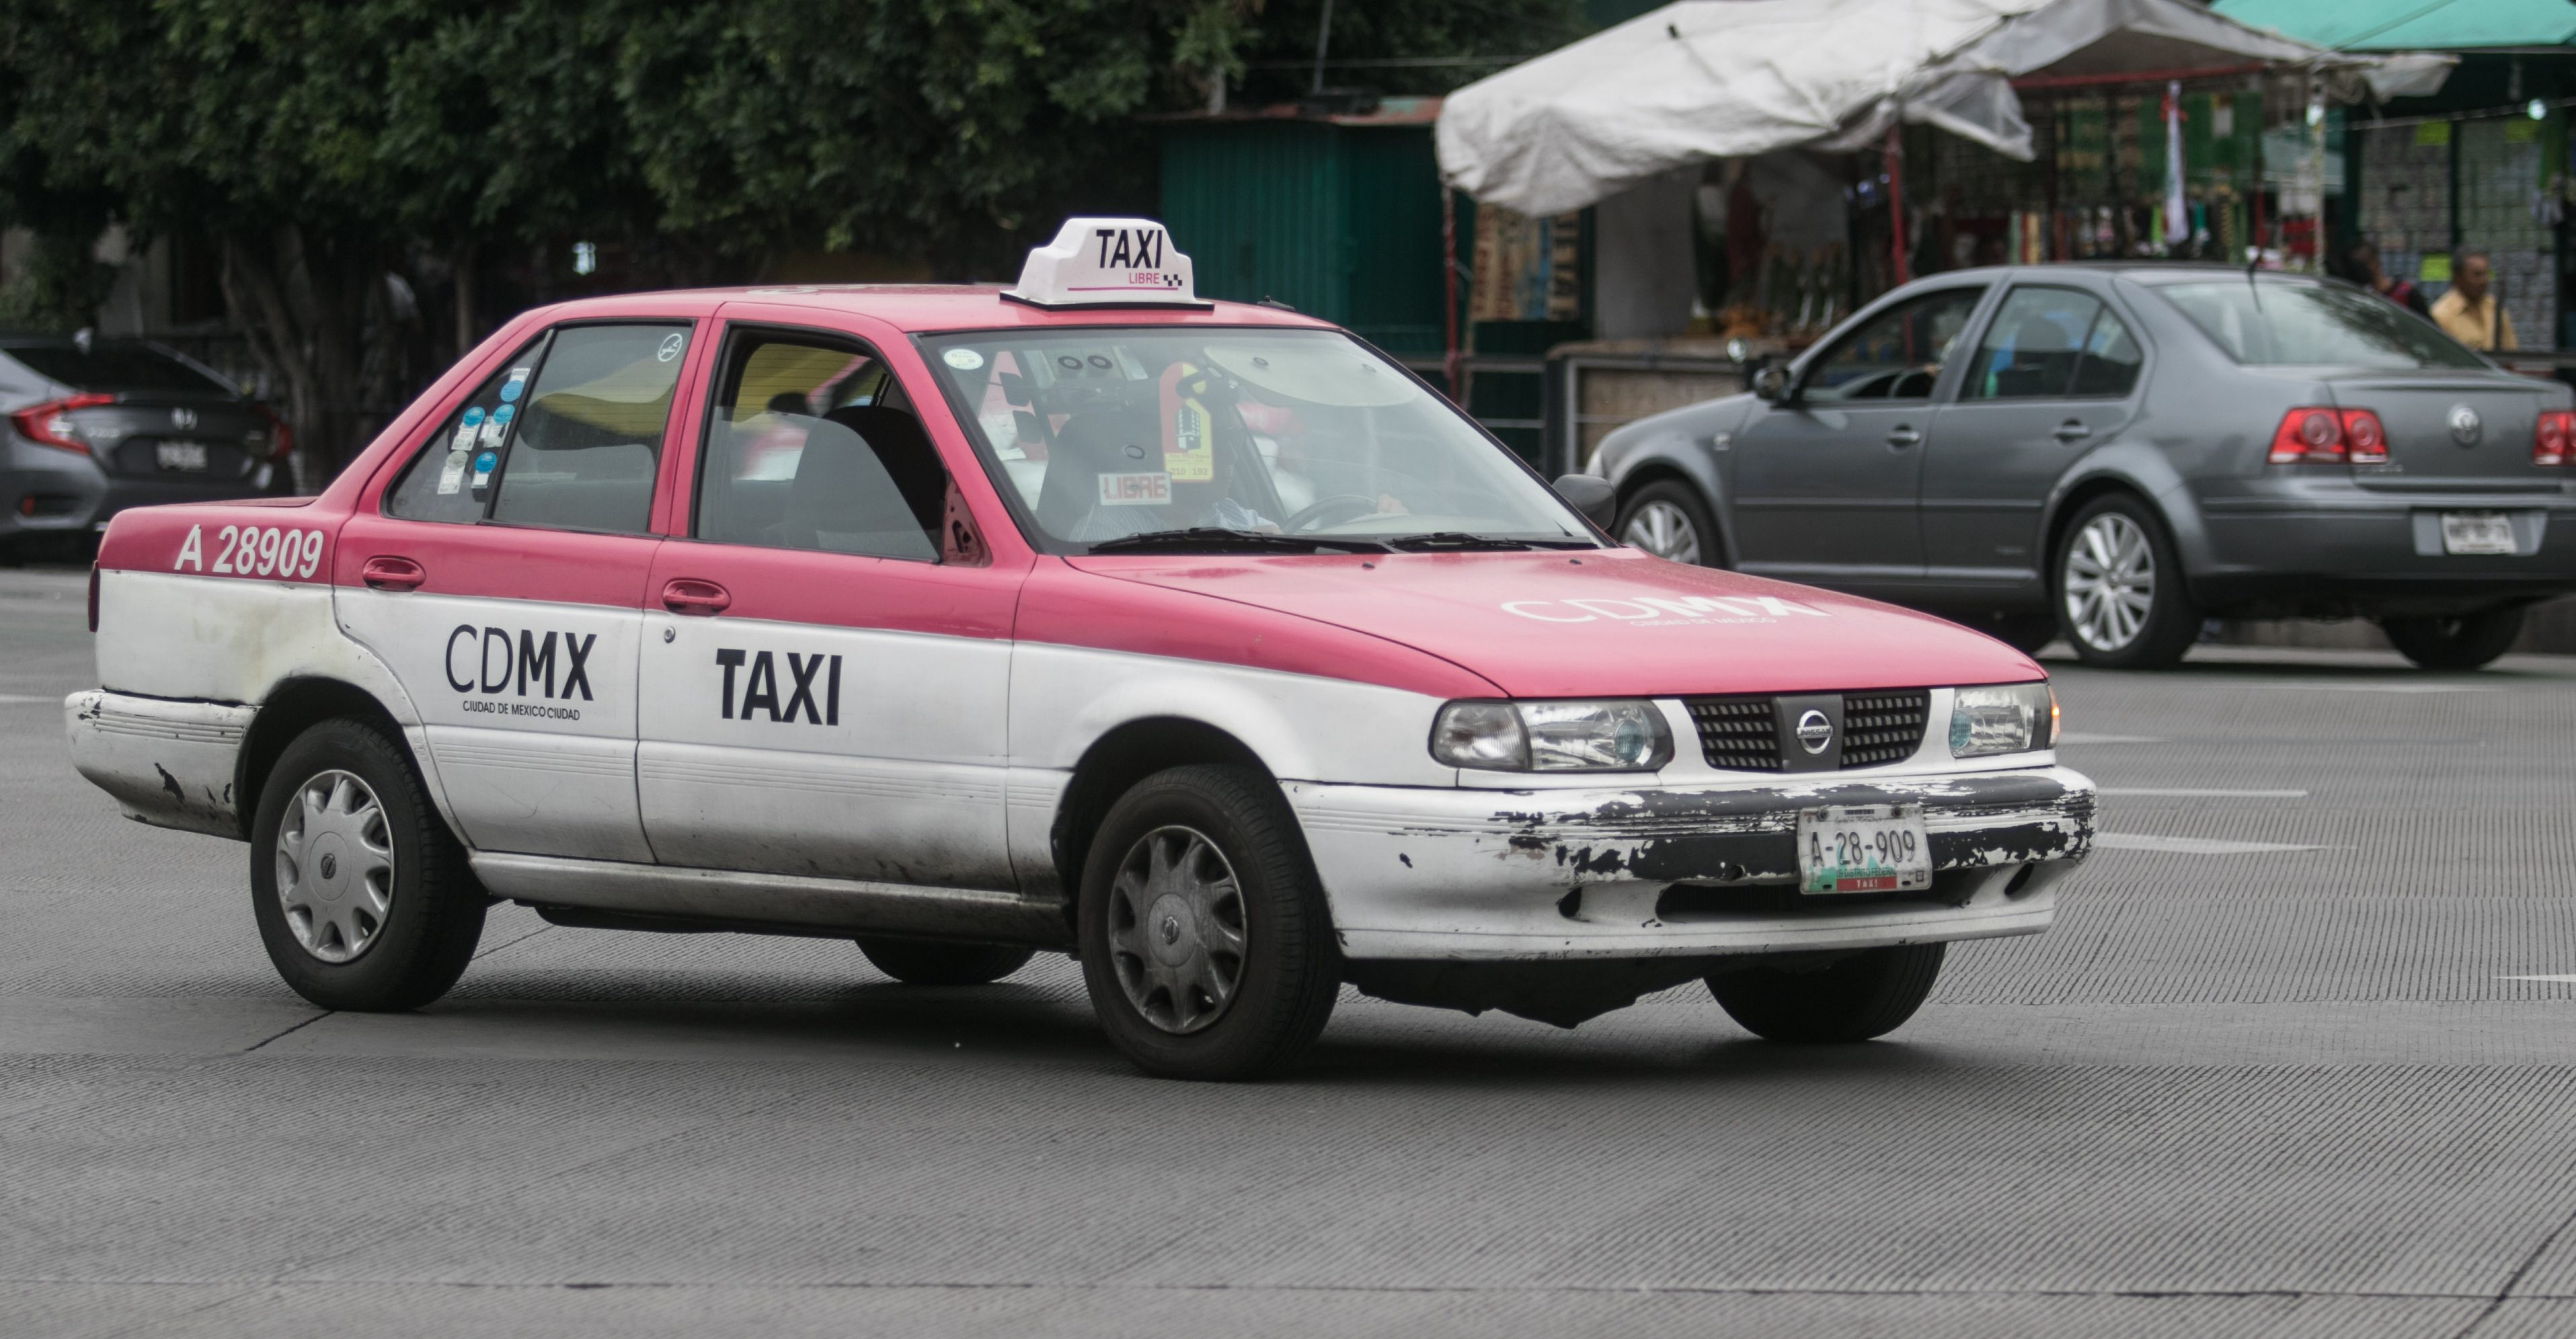 Dos taxistas de CDMX fingen discusión para secuestrar a tres menores